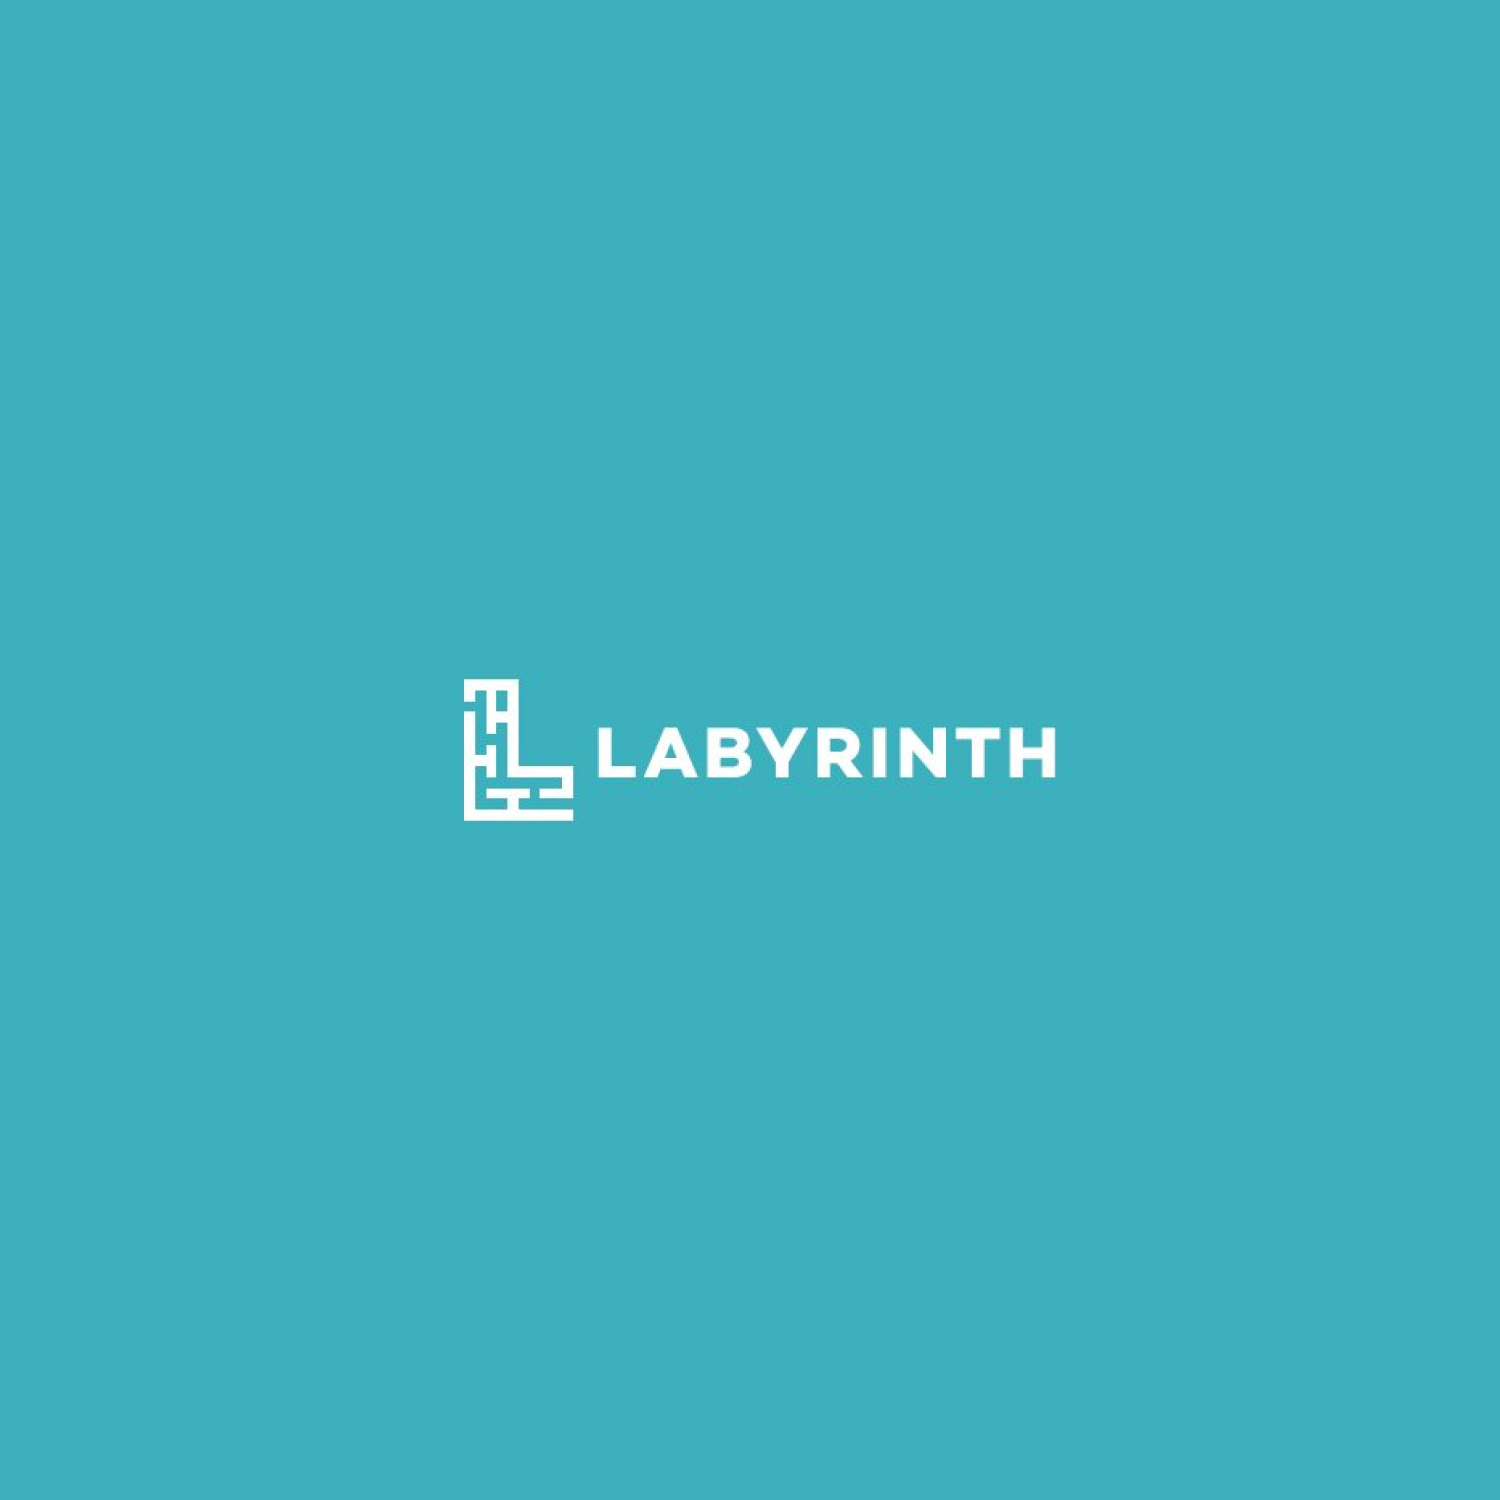 Labyrinth - Letter L Logo cover.